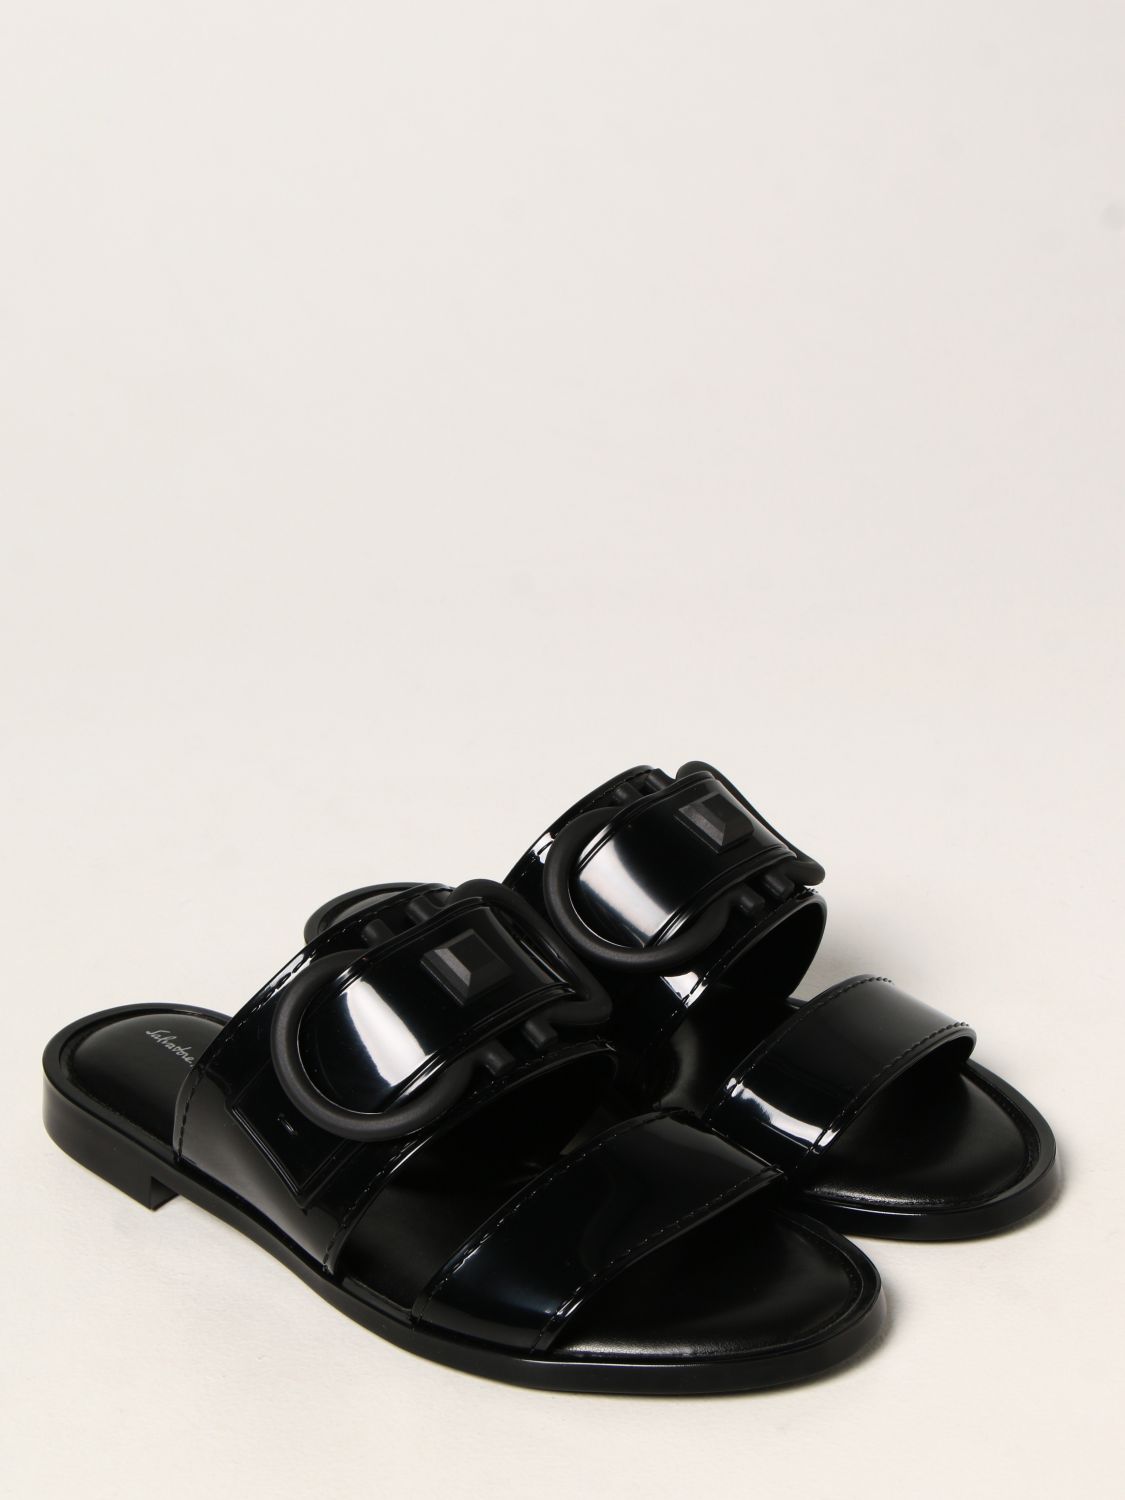 Sandales plates Salvatore Ferragamo: Chaussures femme Salvatore Ferragamo noir 2